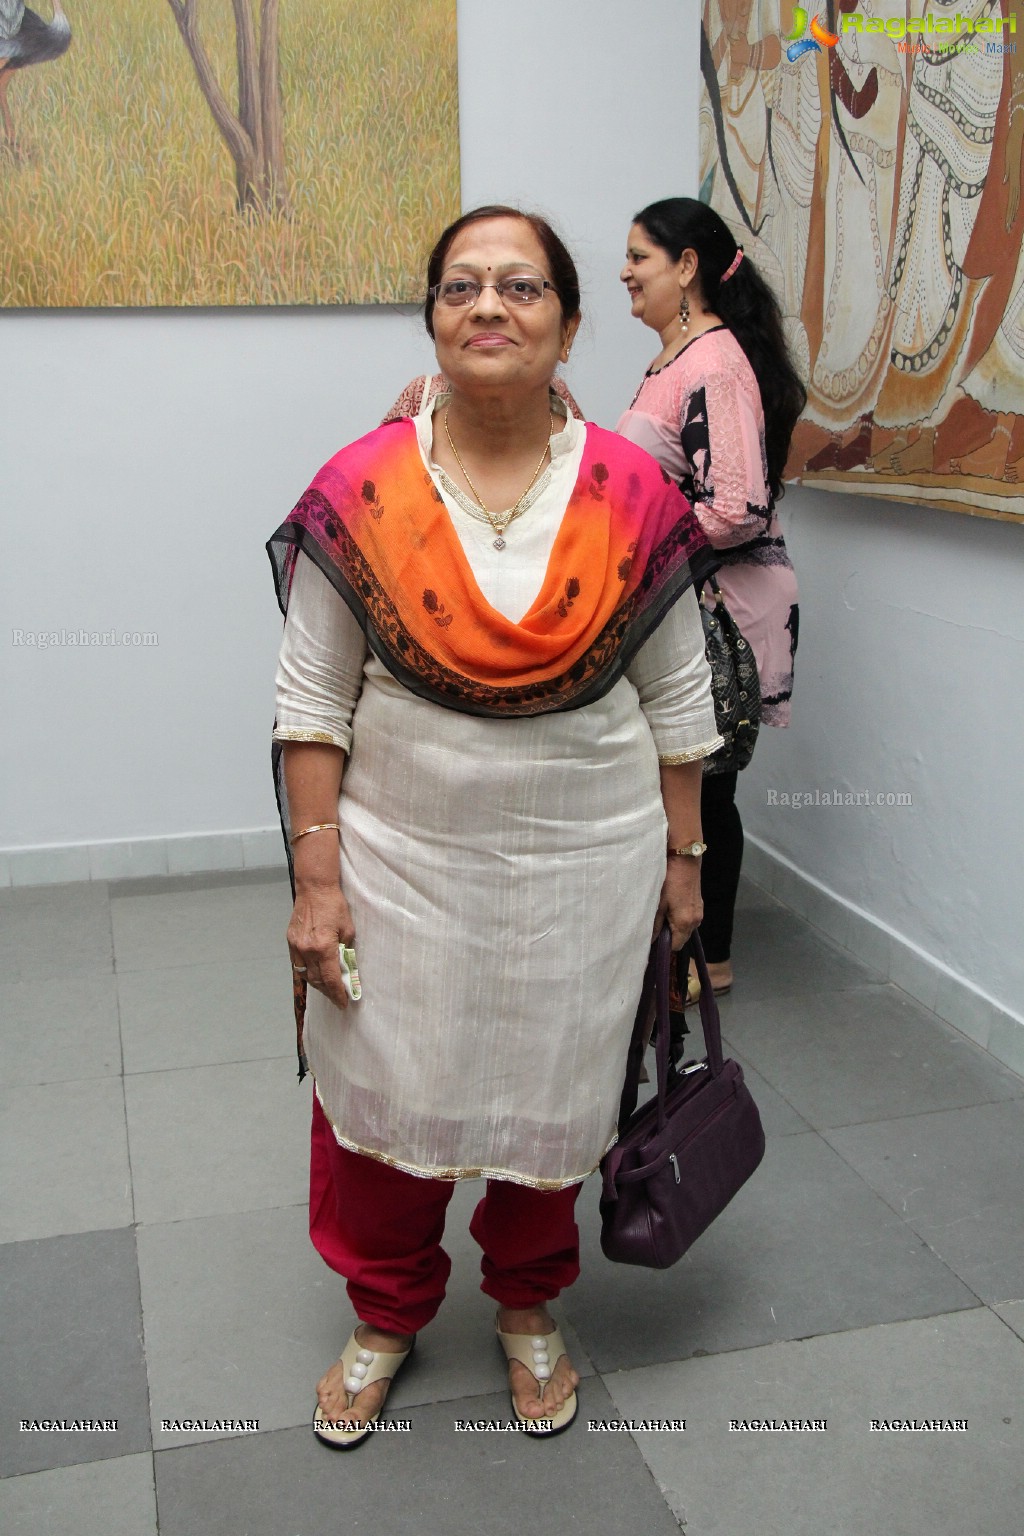 Sanskruti presents Biryani Aur Haleem - A Slapstick Comedyplay by Vinay Verma at Birla Science Museum